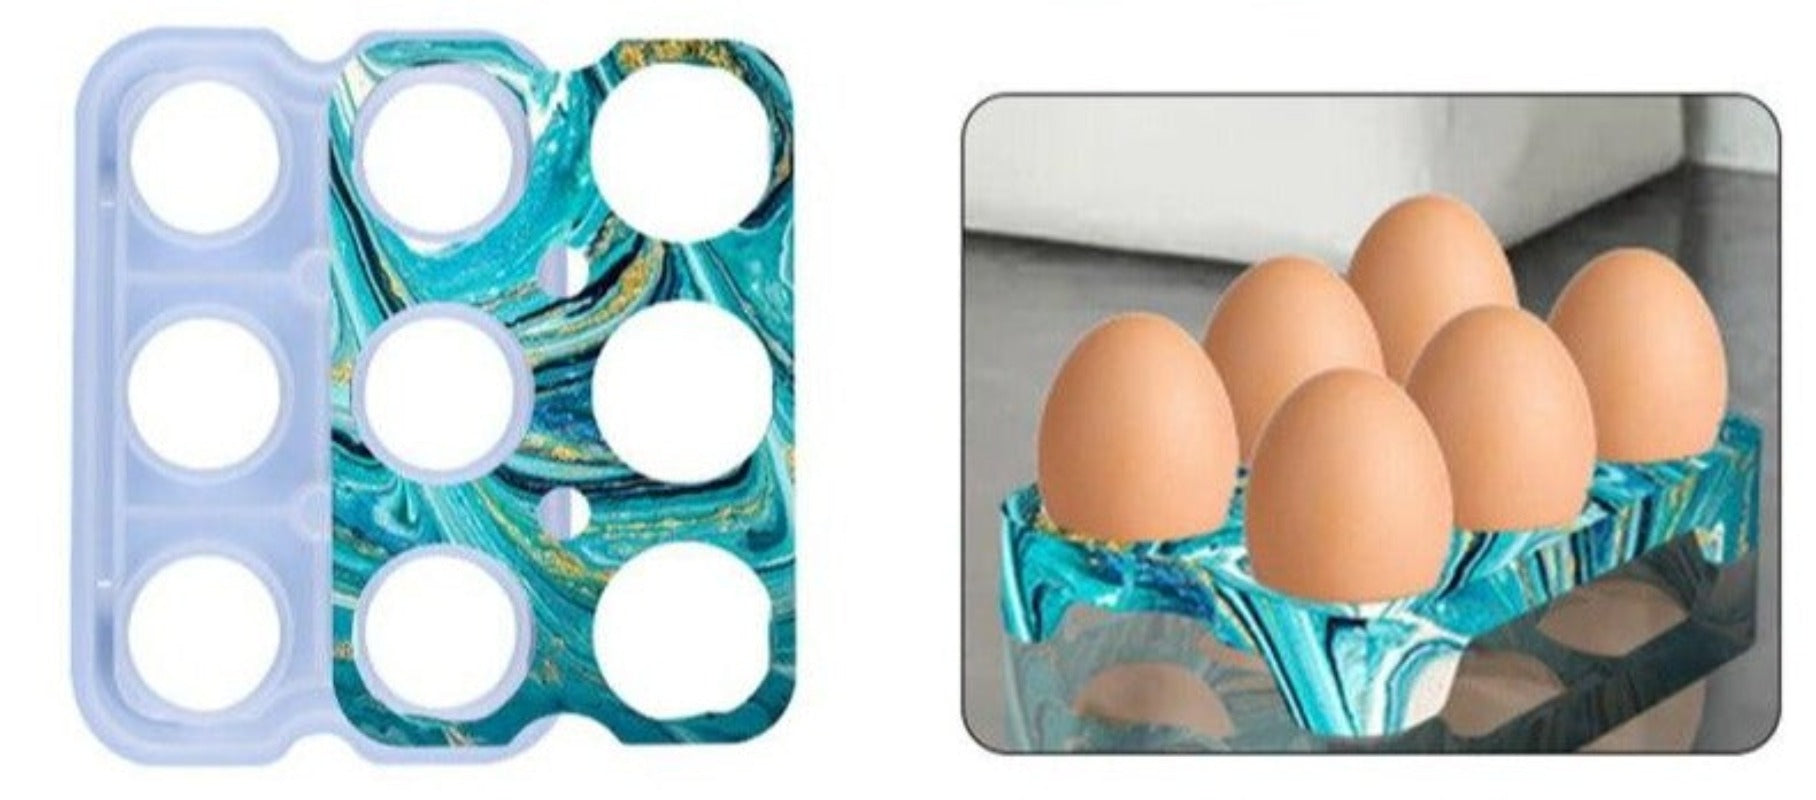 egg holder resin silicone mold